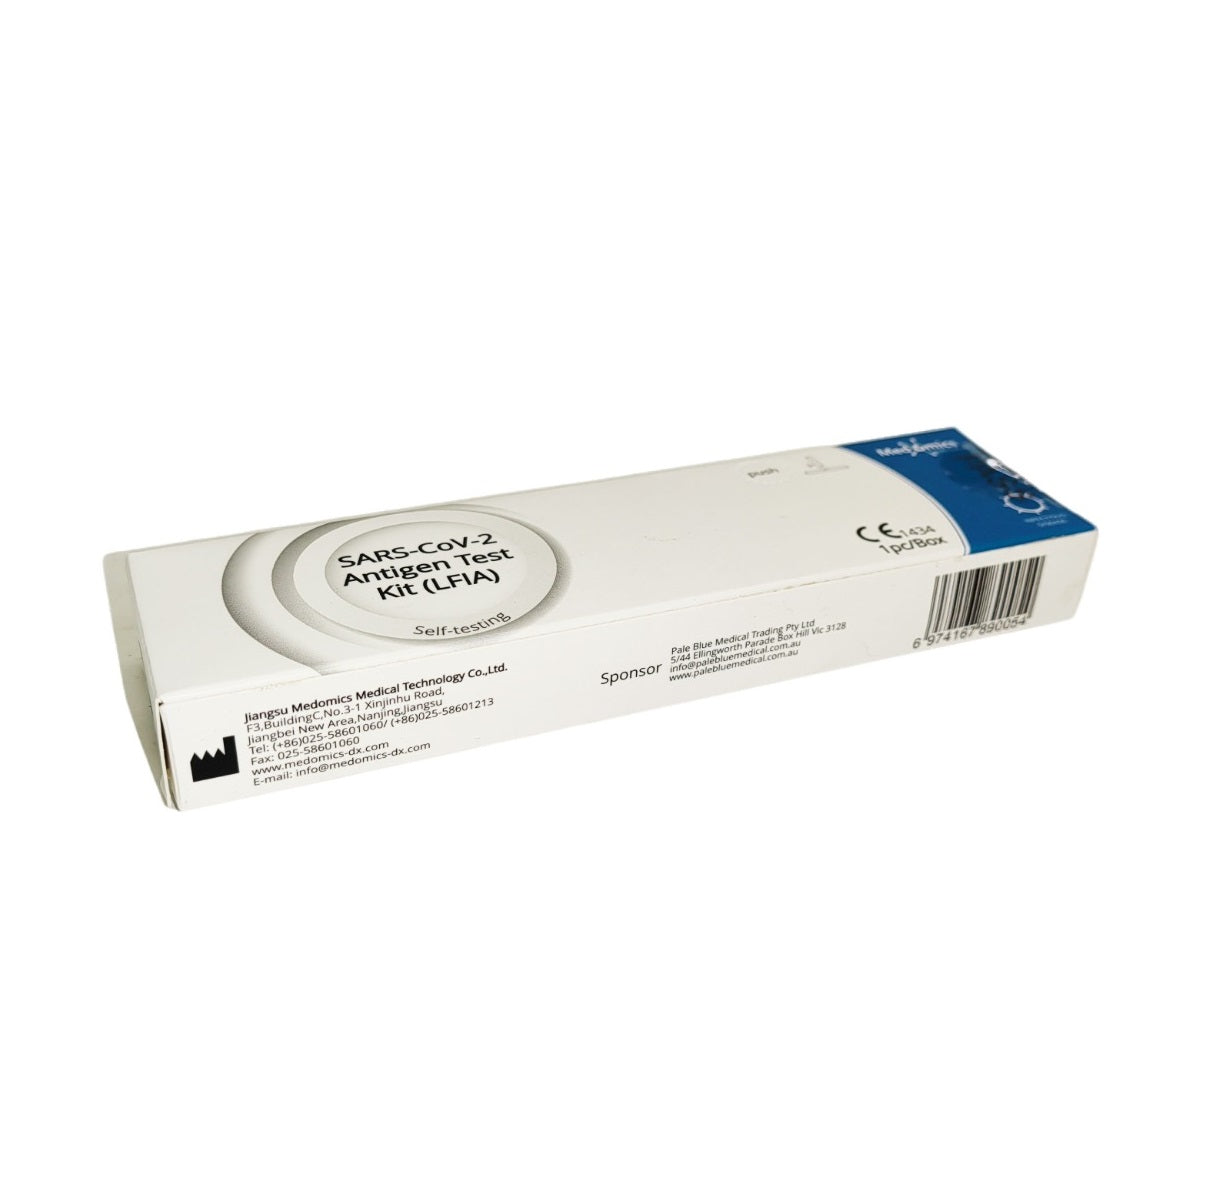 Medomics, SARS-CoVid-2 Rapid Antigen Self Test Kit (LFIA)-Single Pack